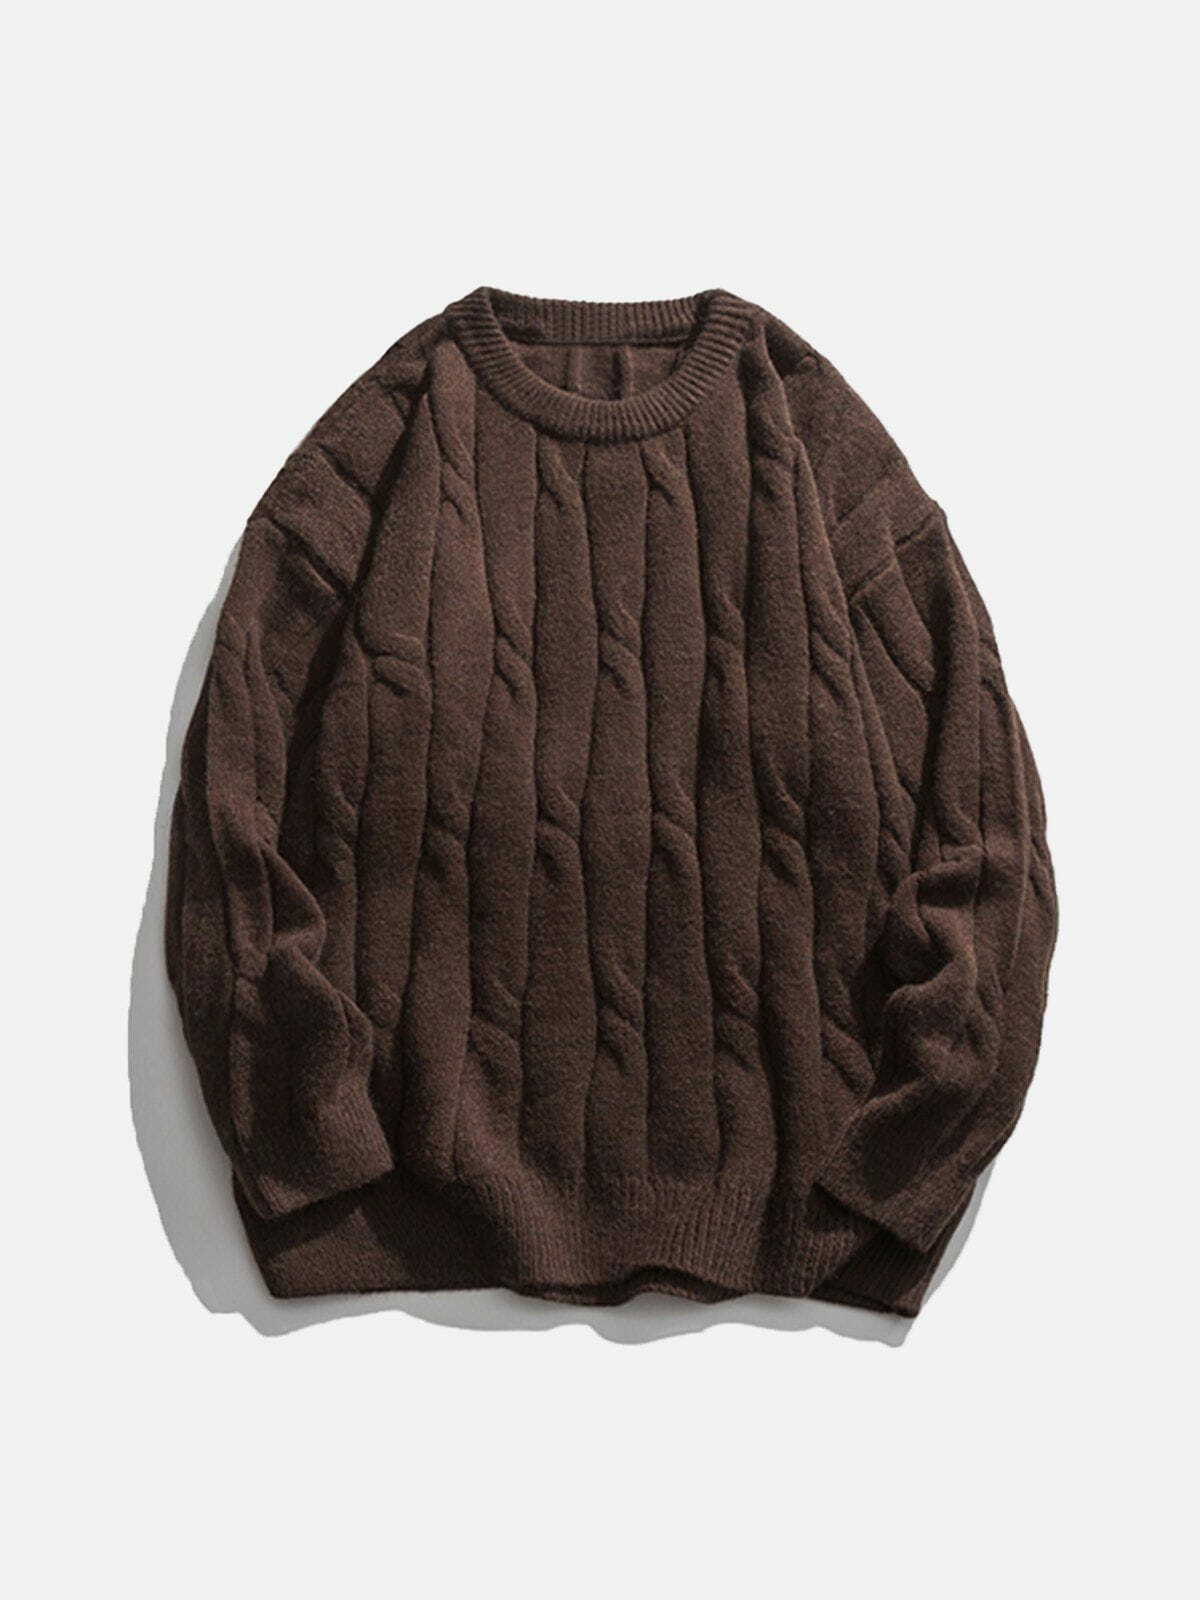 vibrant woven sweater bold & chic streetwear 8902